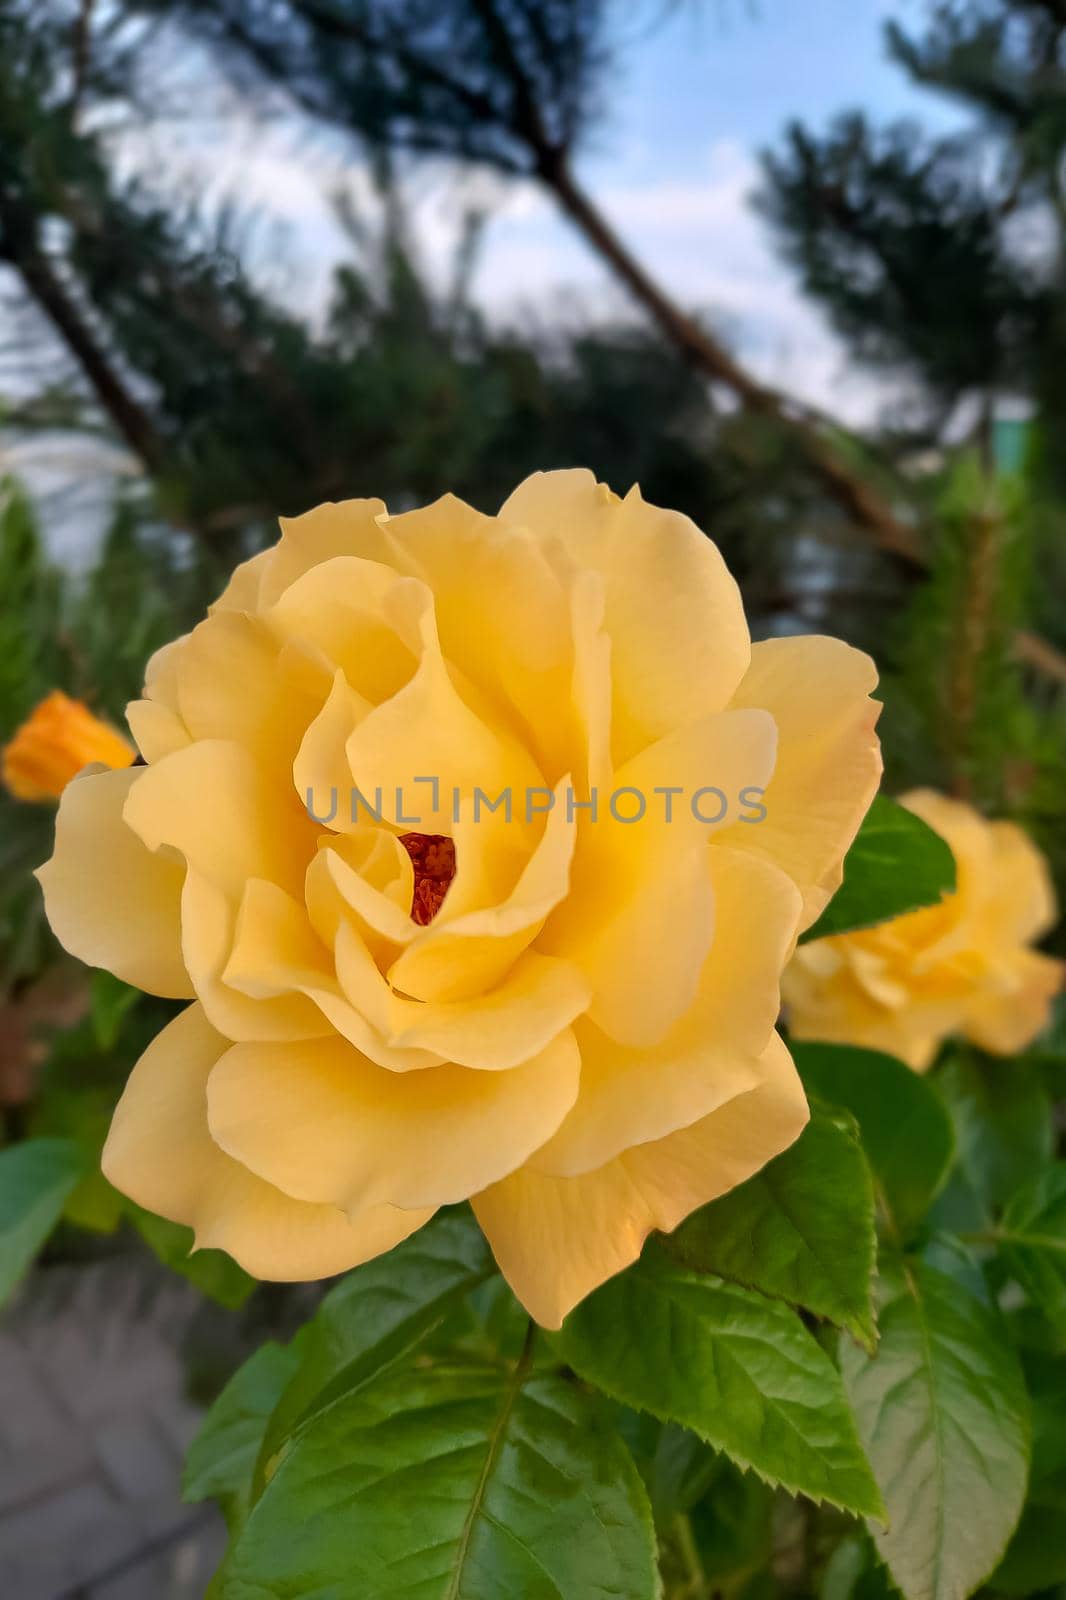 Beautiful yellow garden rose blooms in spring. by kip02kas